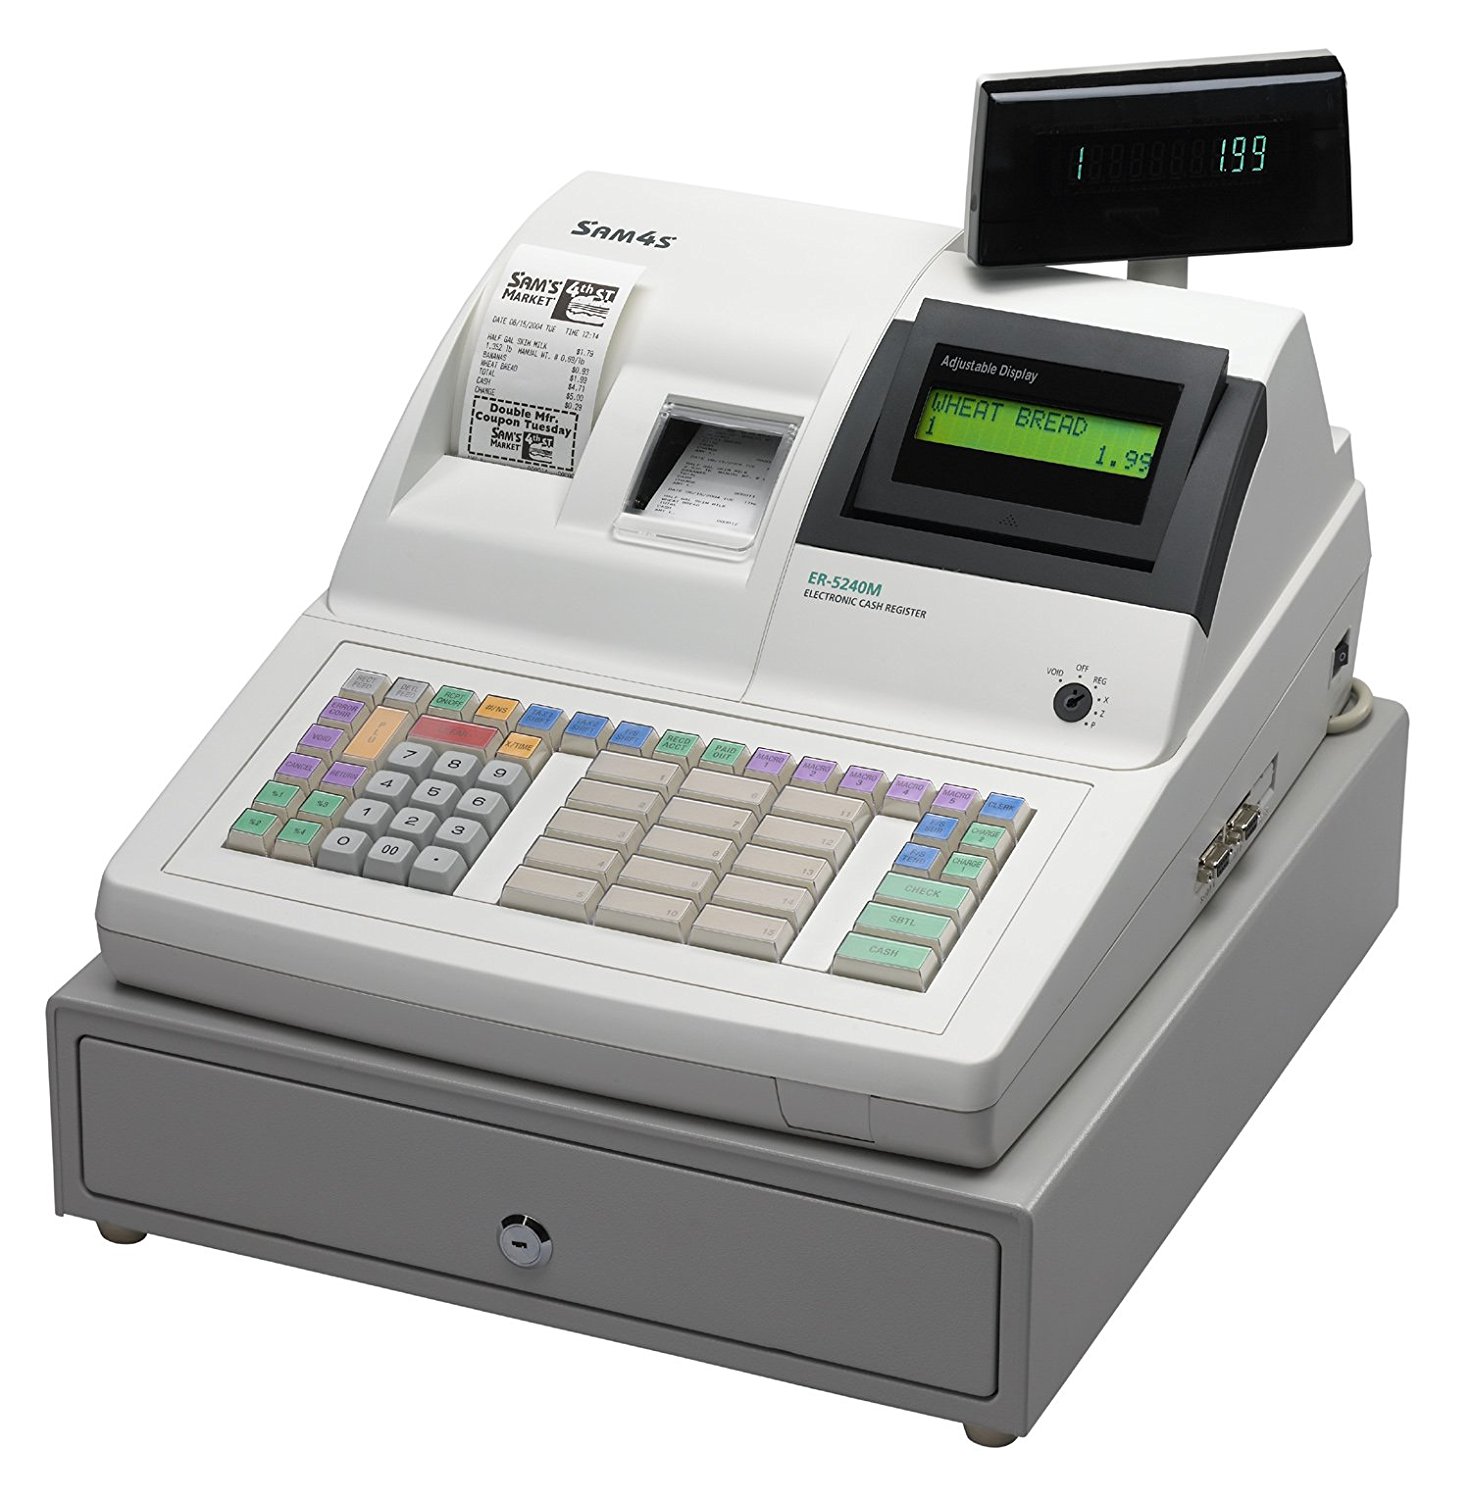 Amazon.com : Sam4s ER-5240M Commercial Electronic Cash Register ...